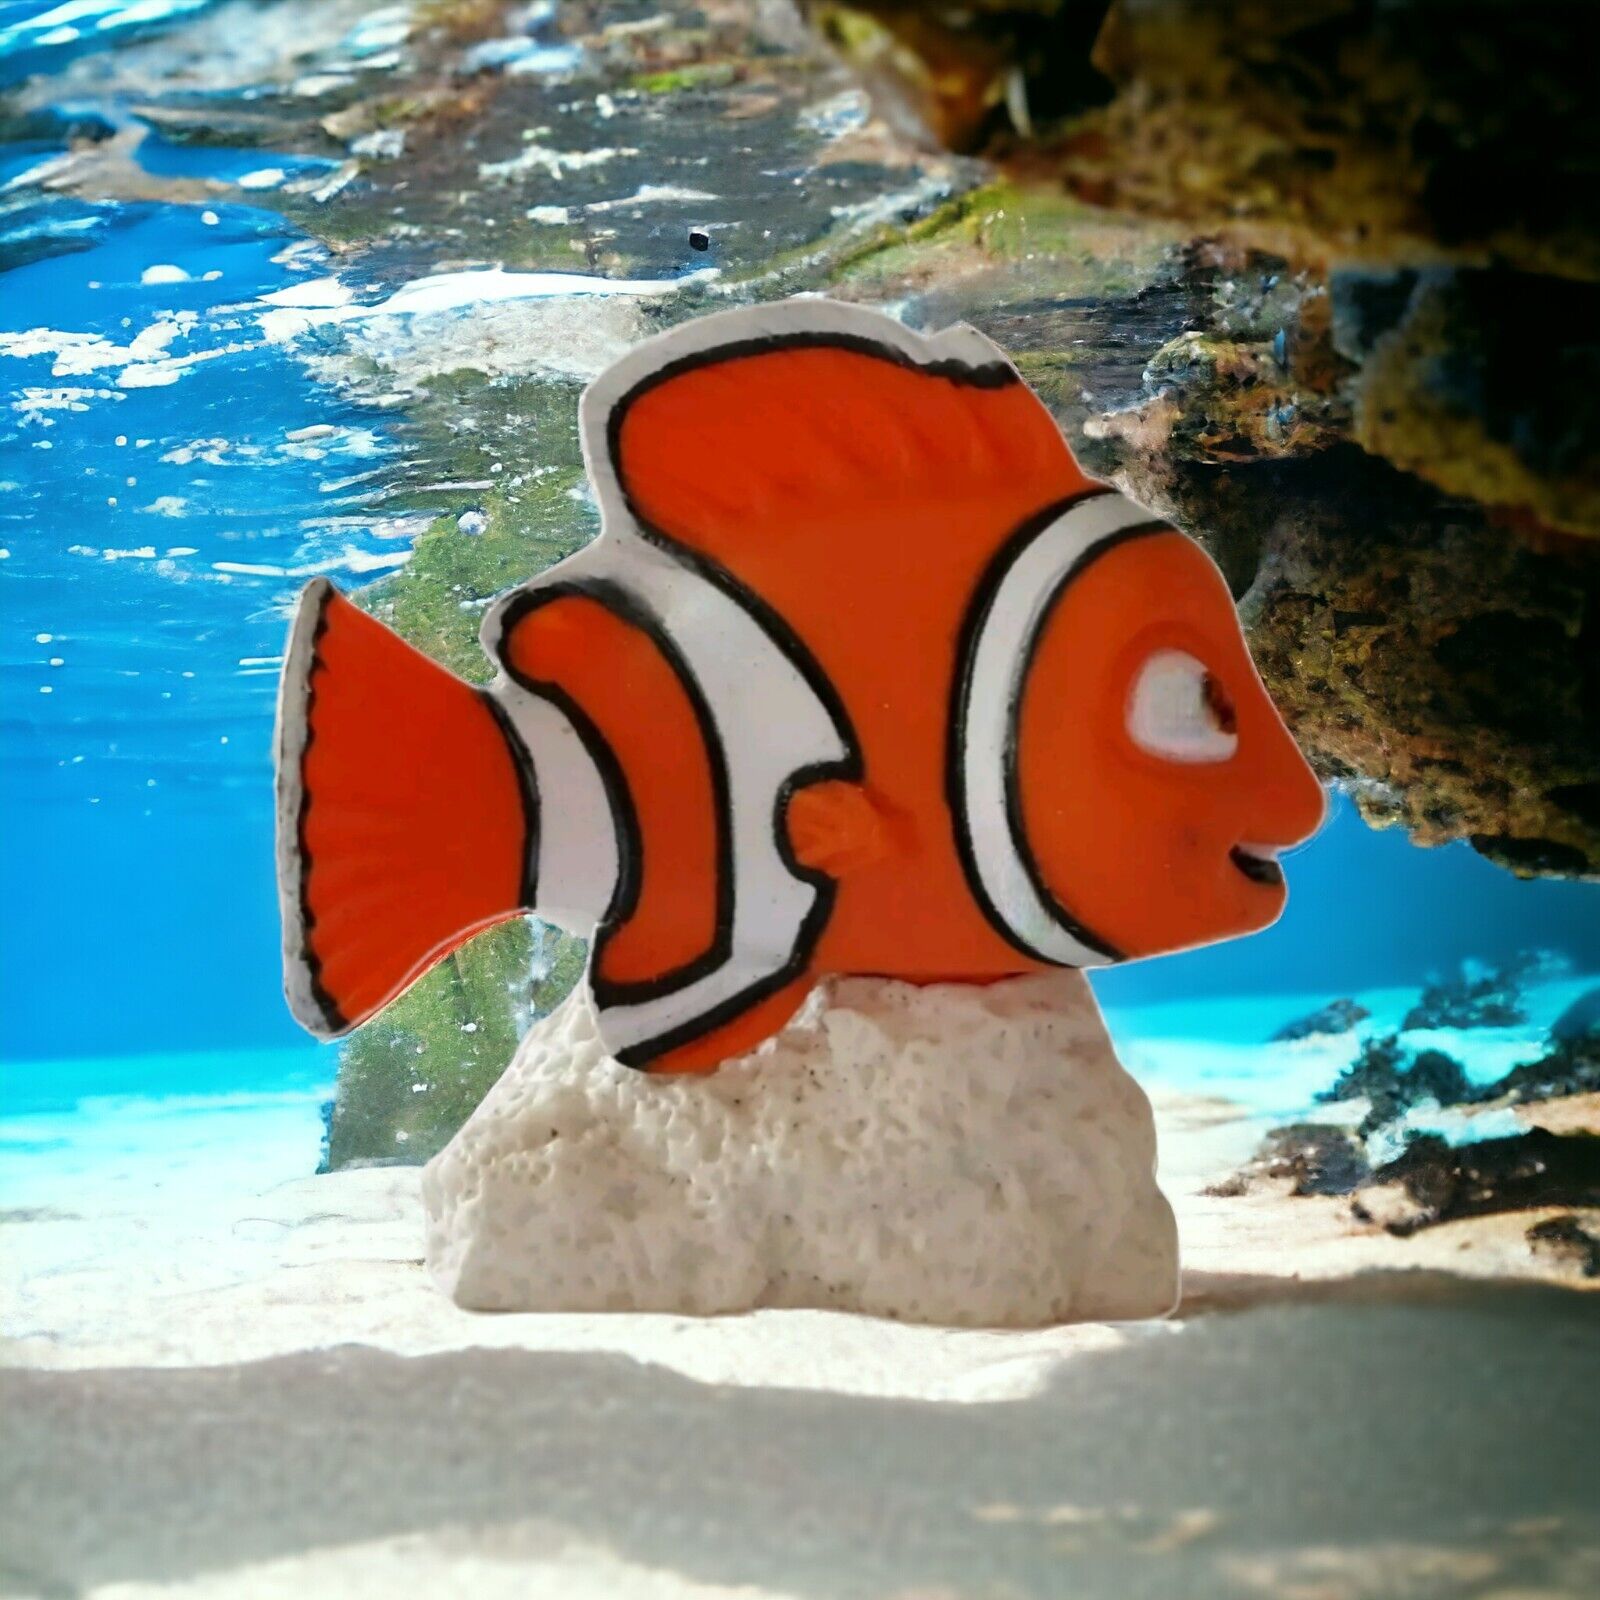 Finding Nemo Clown Fish Cake Topper Toy Figure Orange White Disney Pixar Vinyl